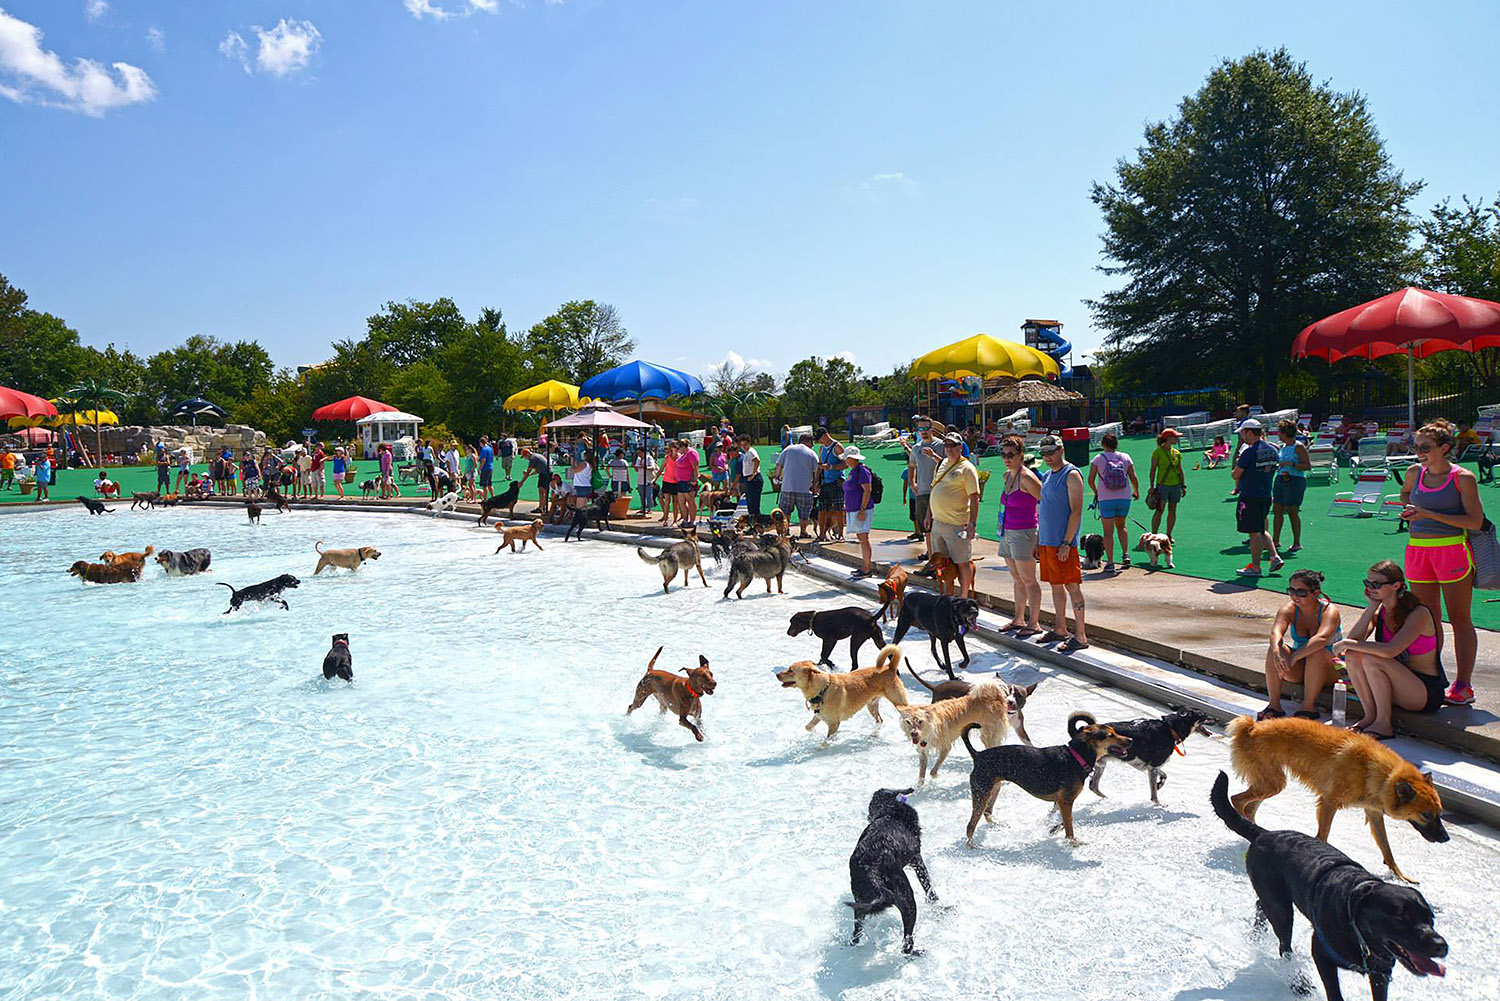 Dogs_Swimming_Pool_Wavepool_Playful_Summertime.jpg